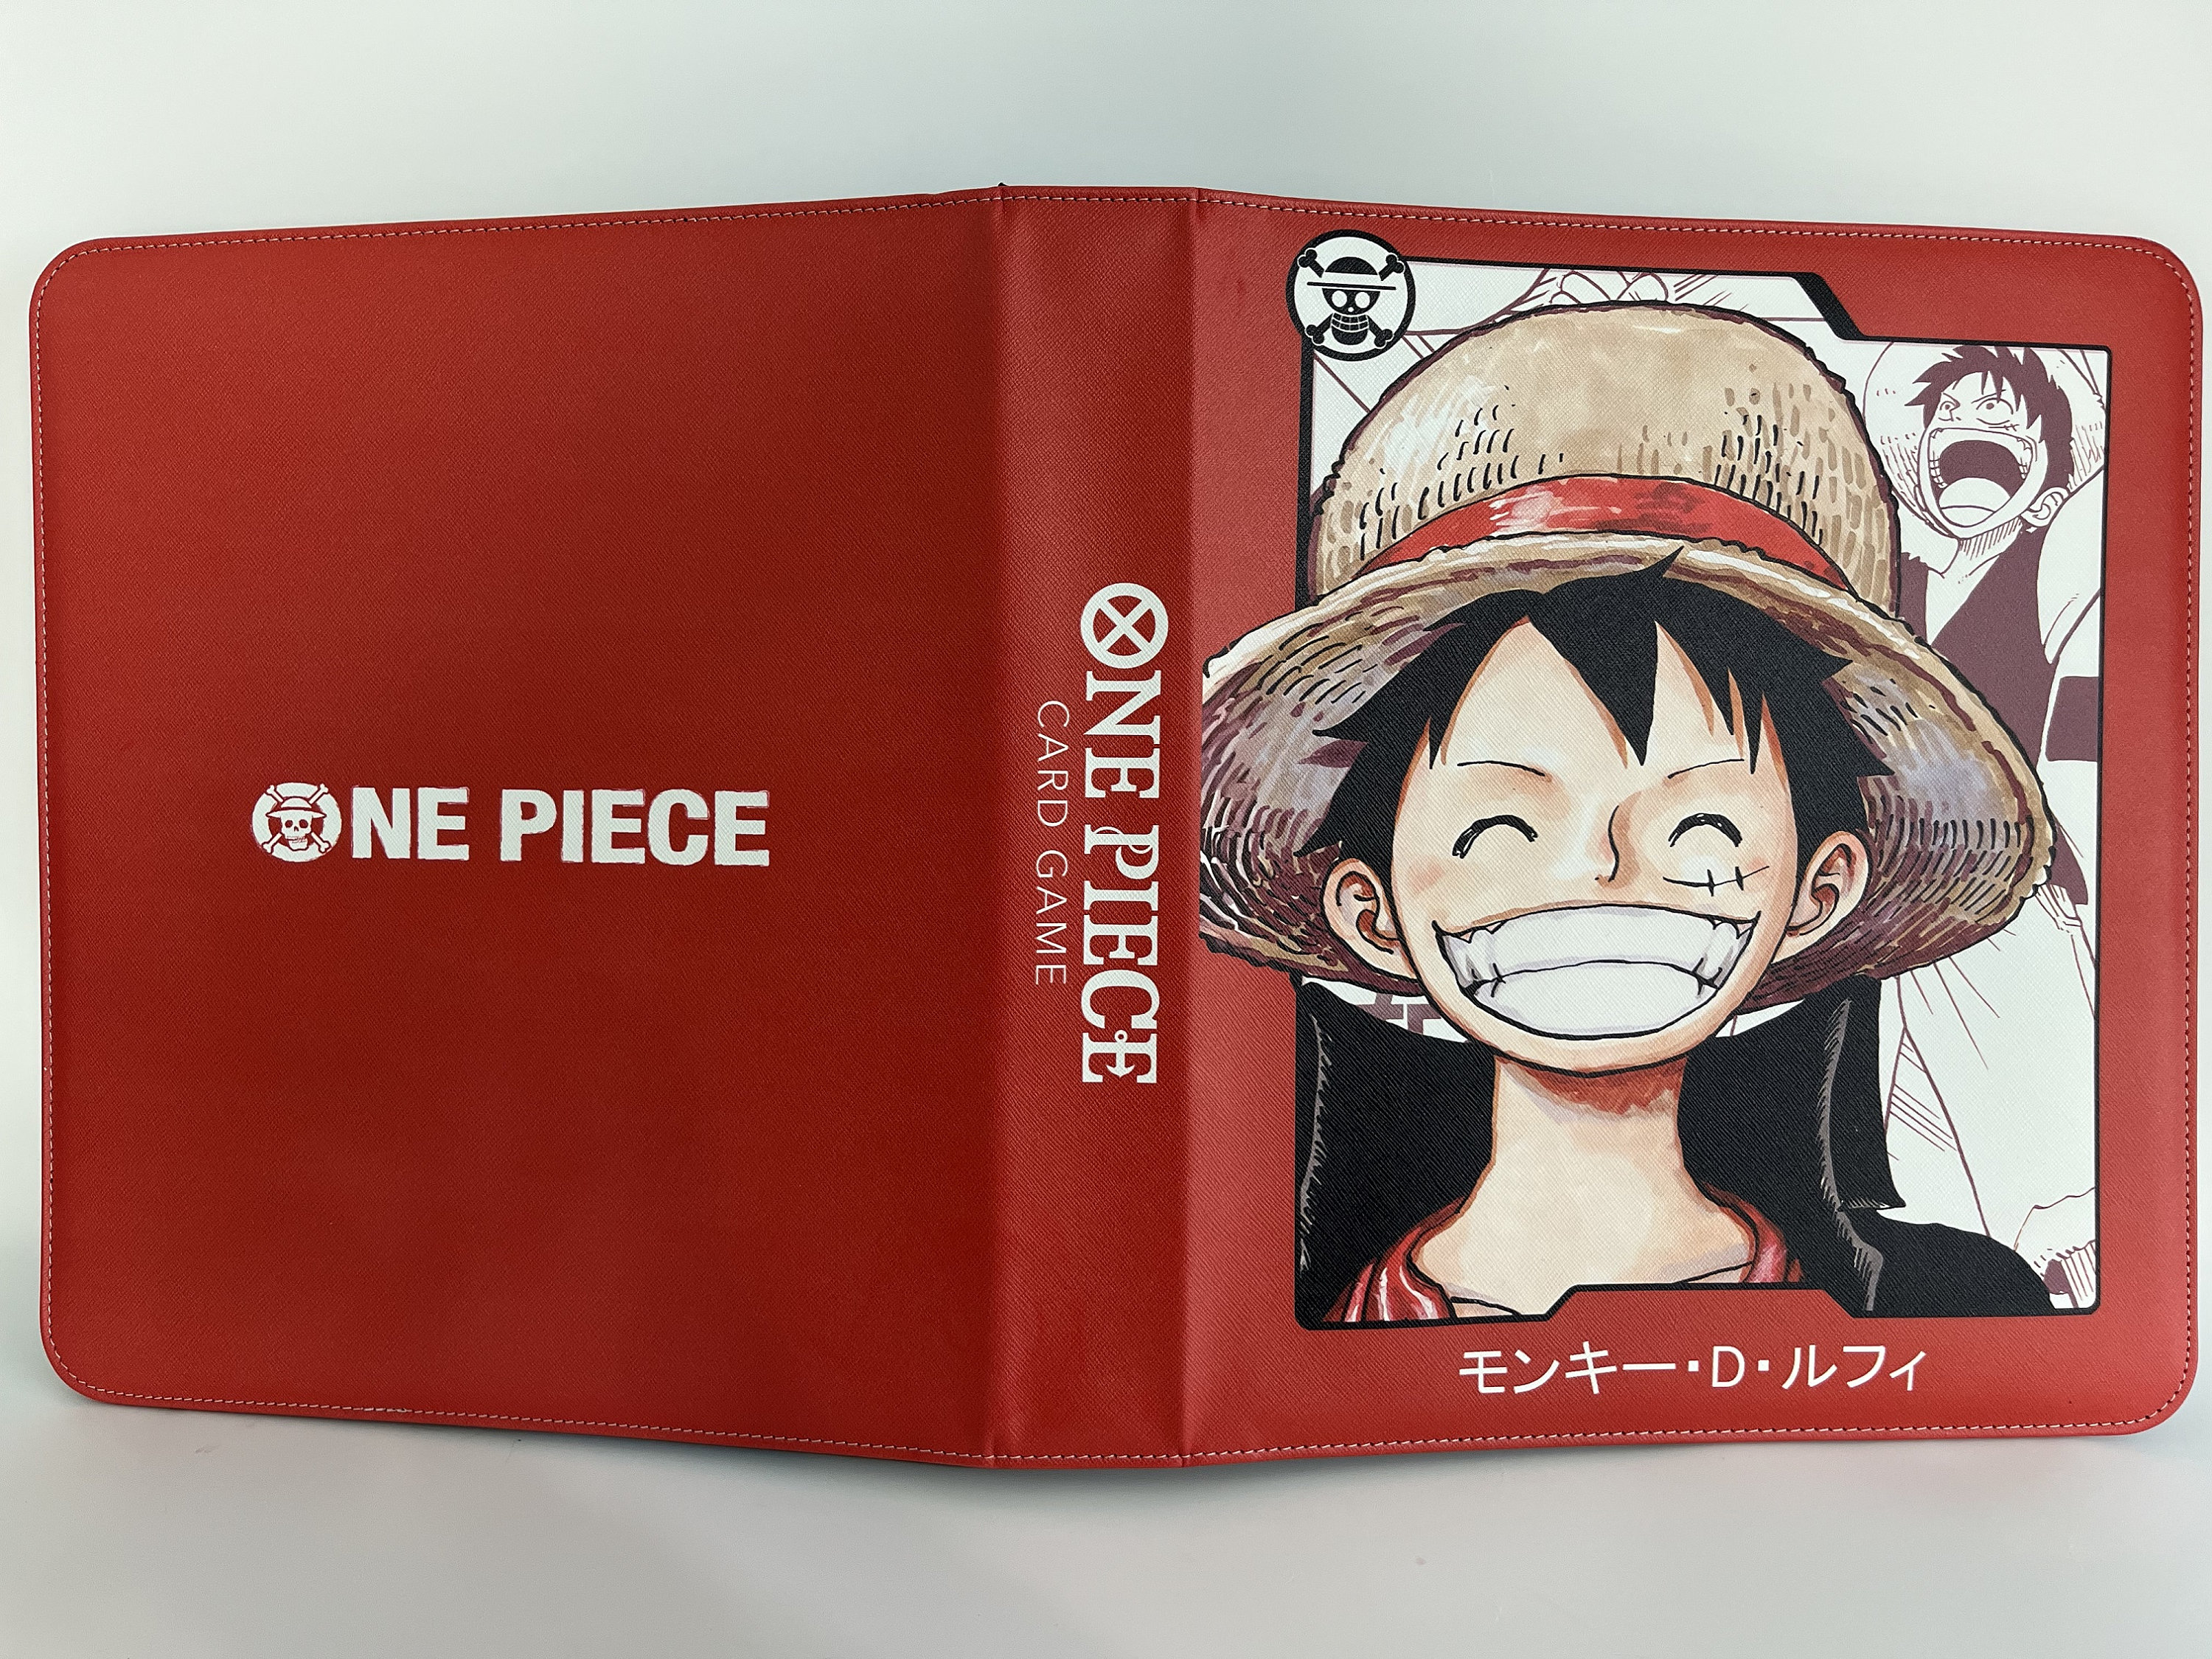 One Piece Card Game 9 Pocket Card Binder Zipper 1 